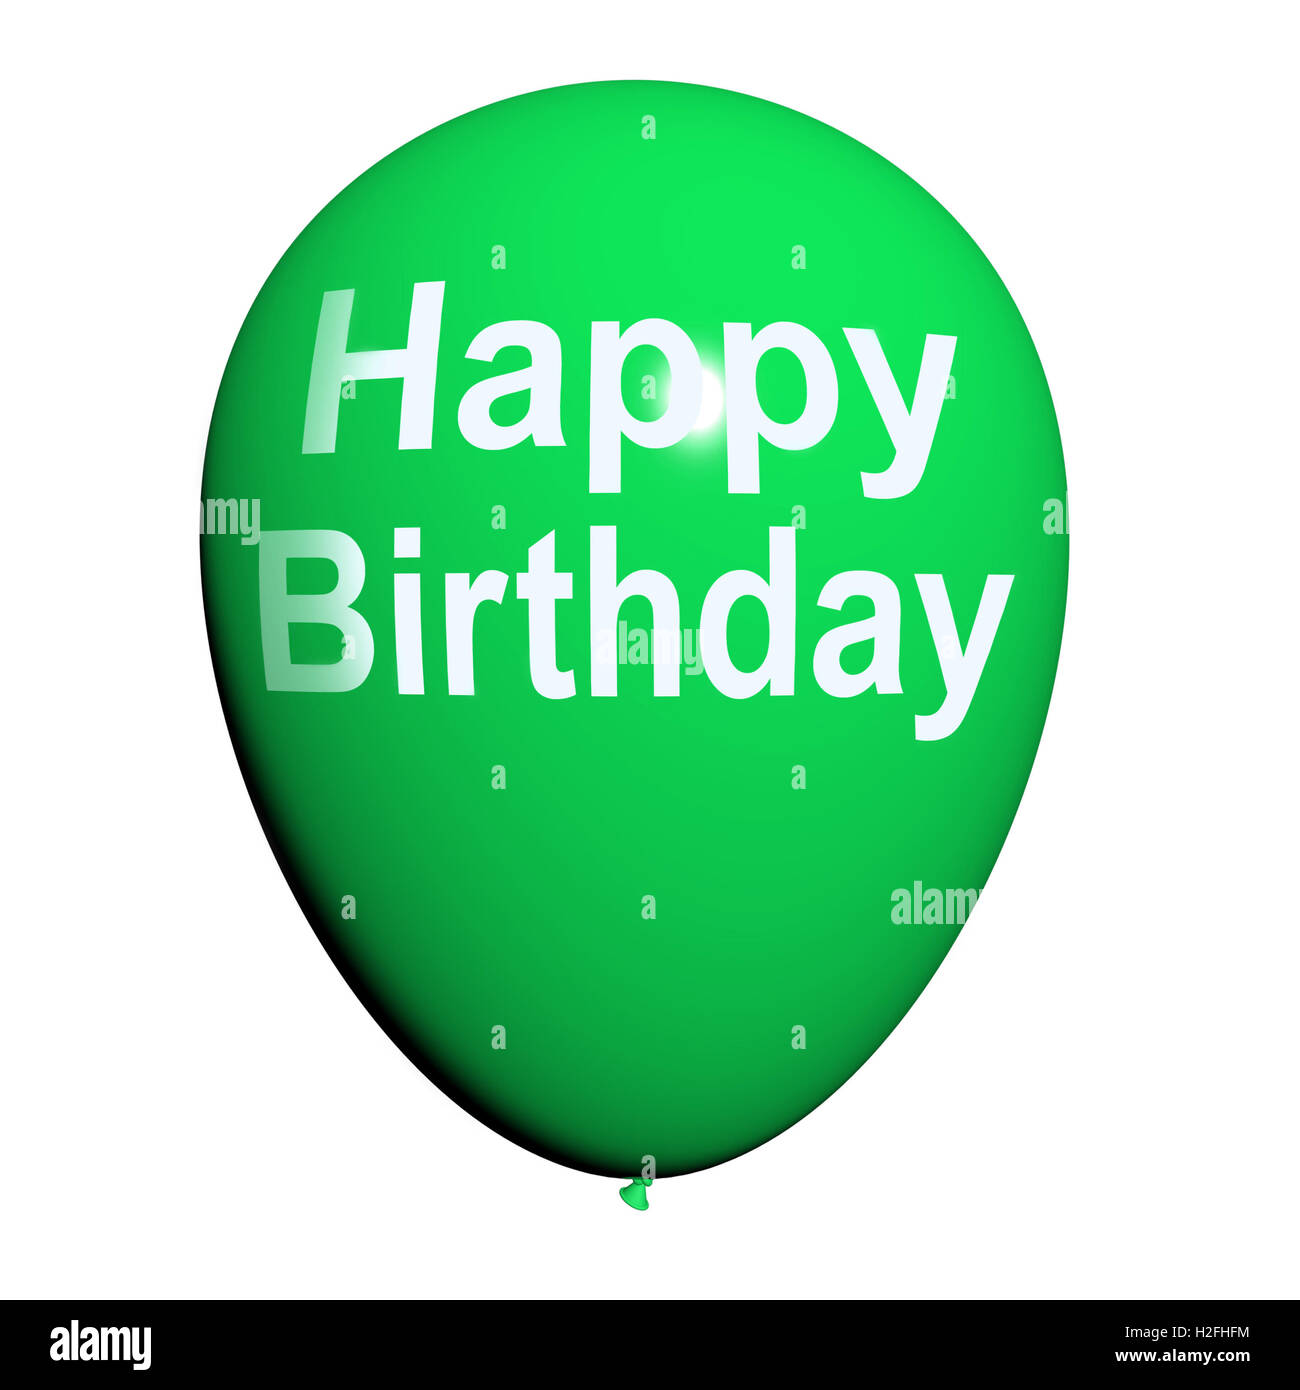 Happy Birthday Balloon Shows Cheerful Festivities and Parties Stock Photo